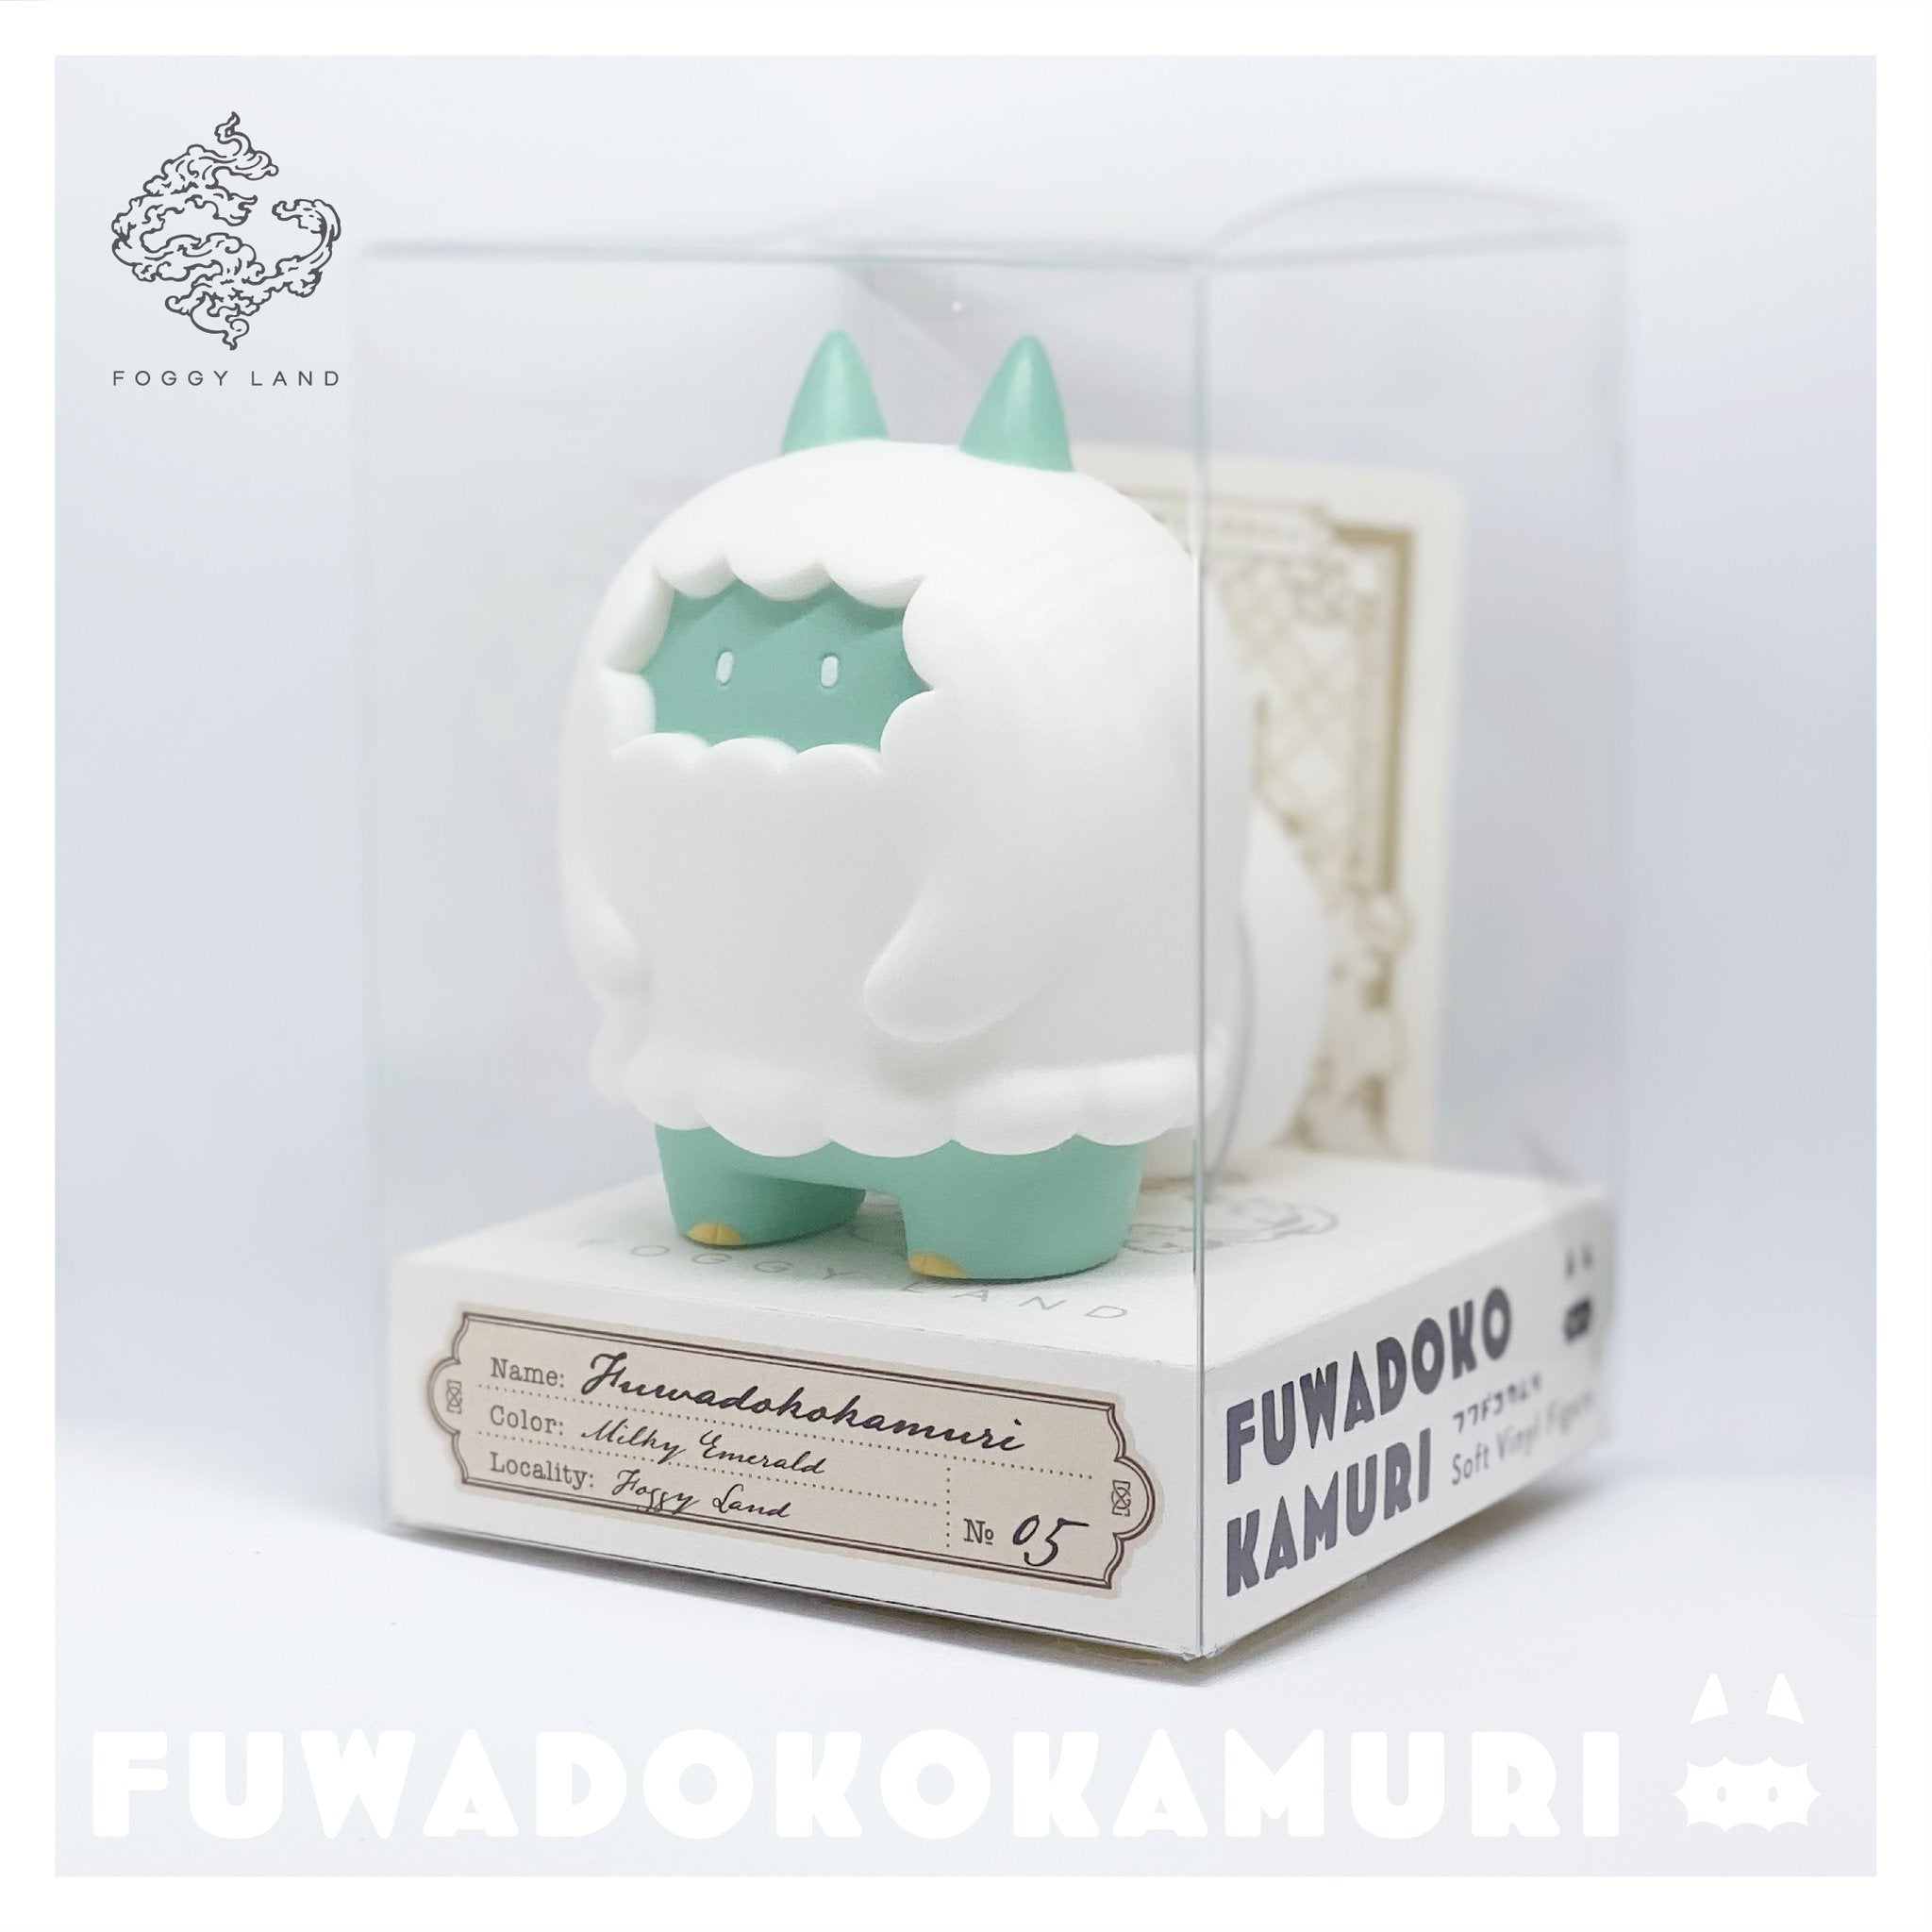 Fuwadokokamuri - Milky Emerald by Moya